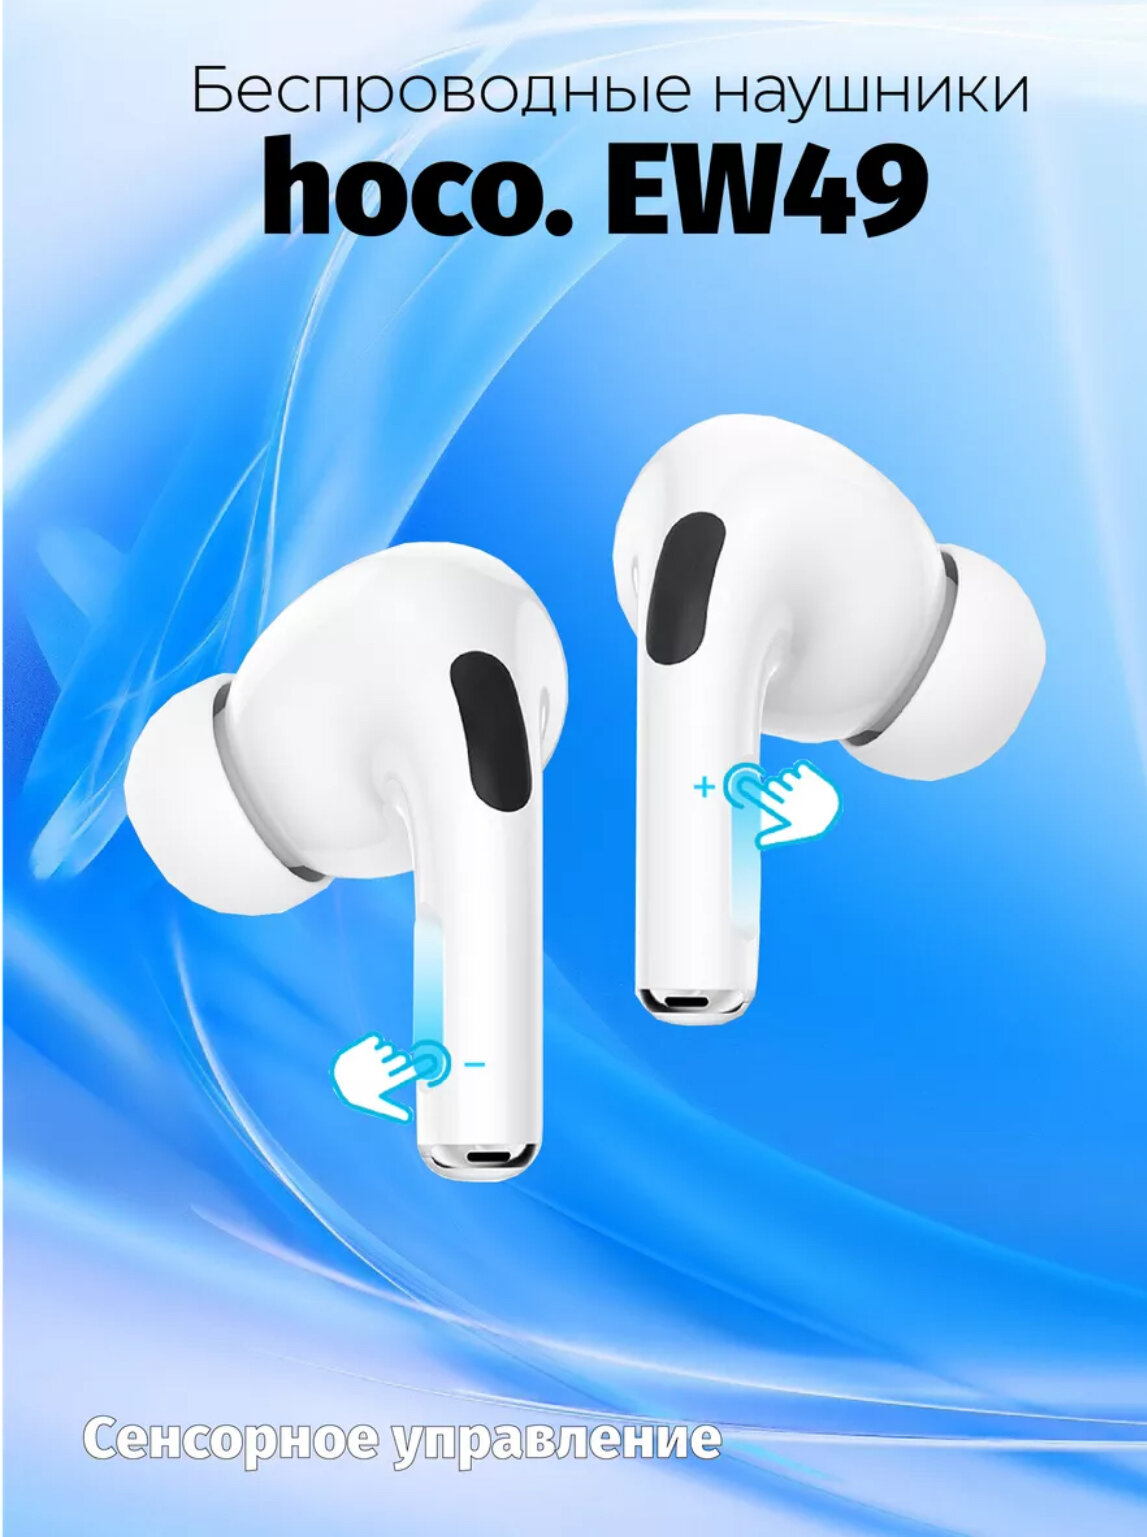 Наушники Hoco EW49 Bluetooth для iPhone, Samsung Galaxy, Redmi Pro 2/3